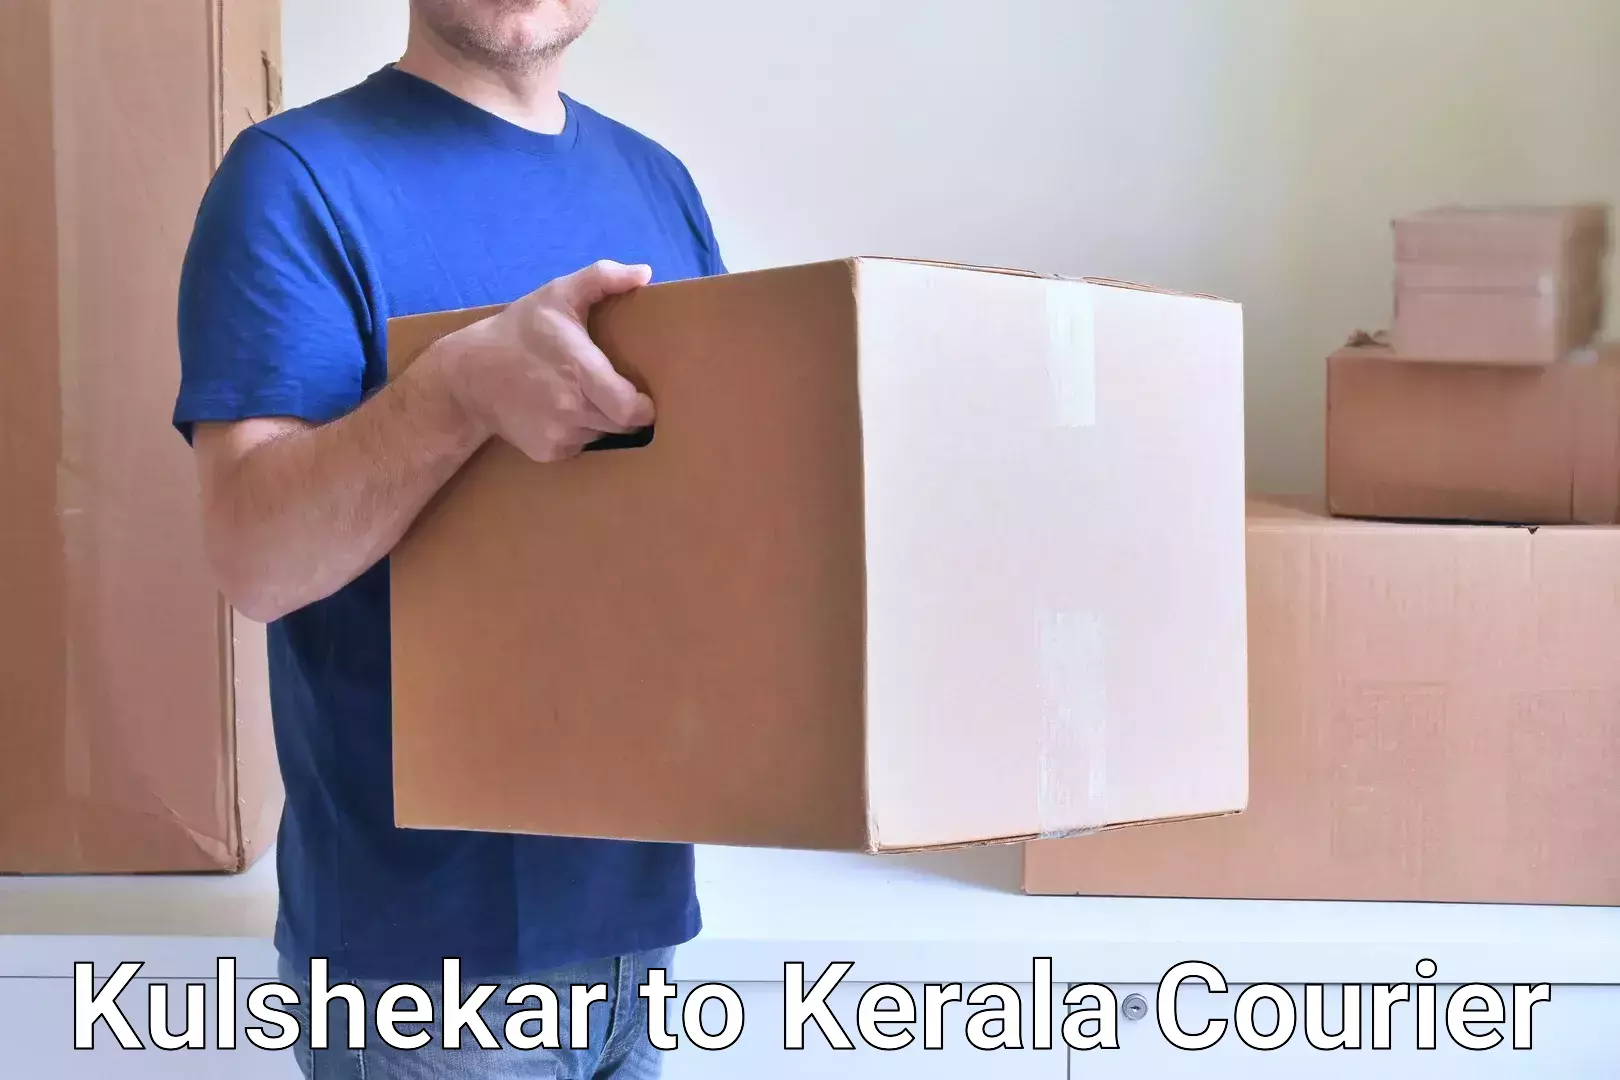 Expedited parcel delivery Kulshekar to Guruvayur